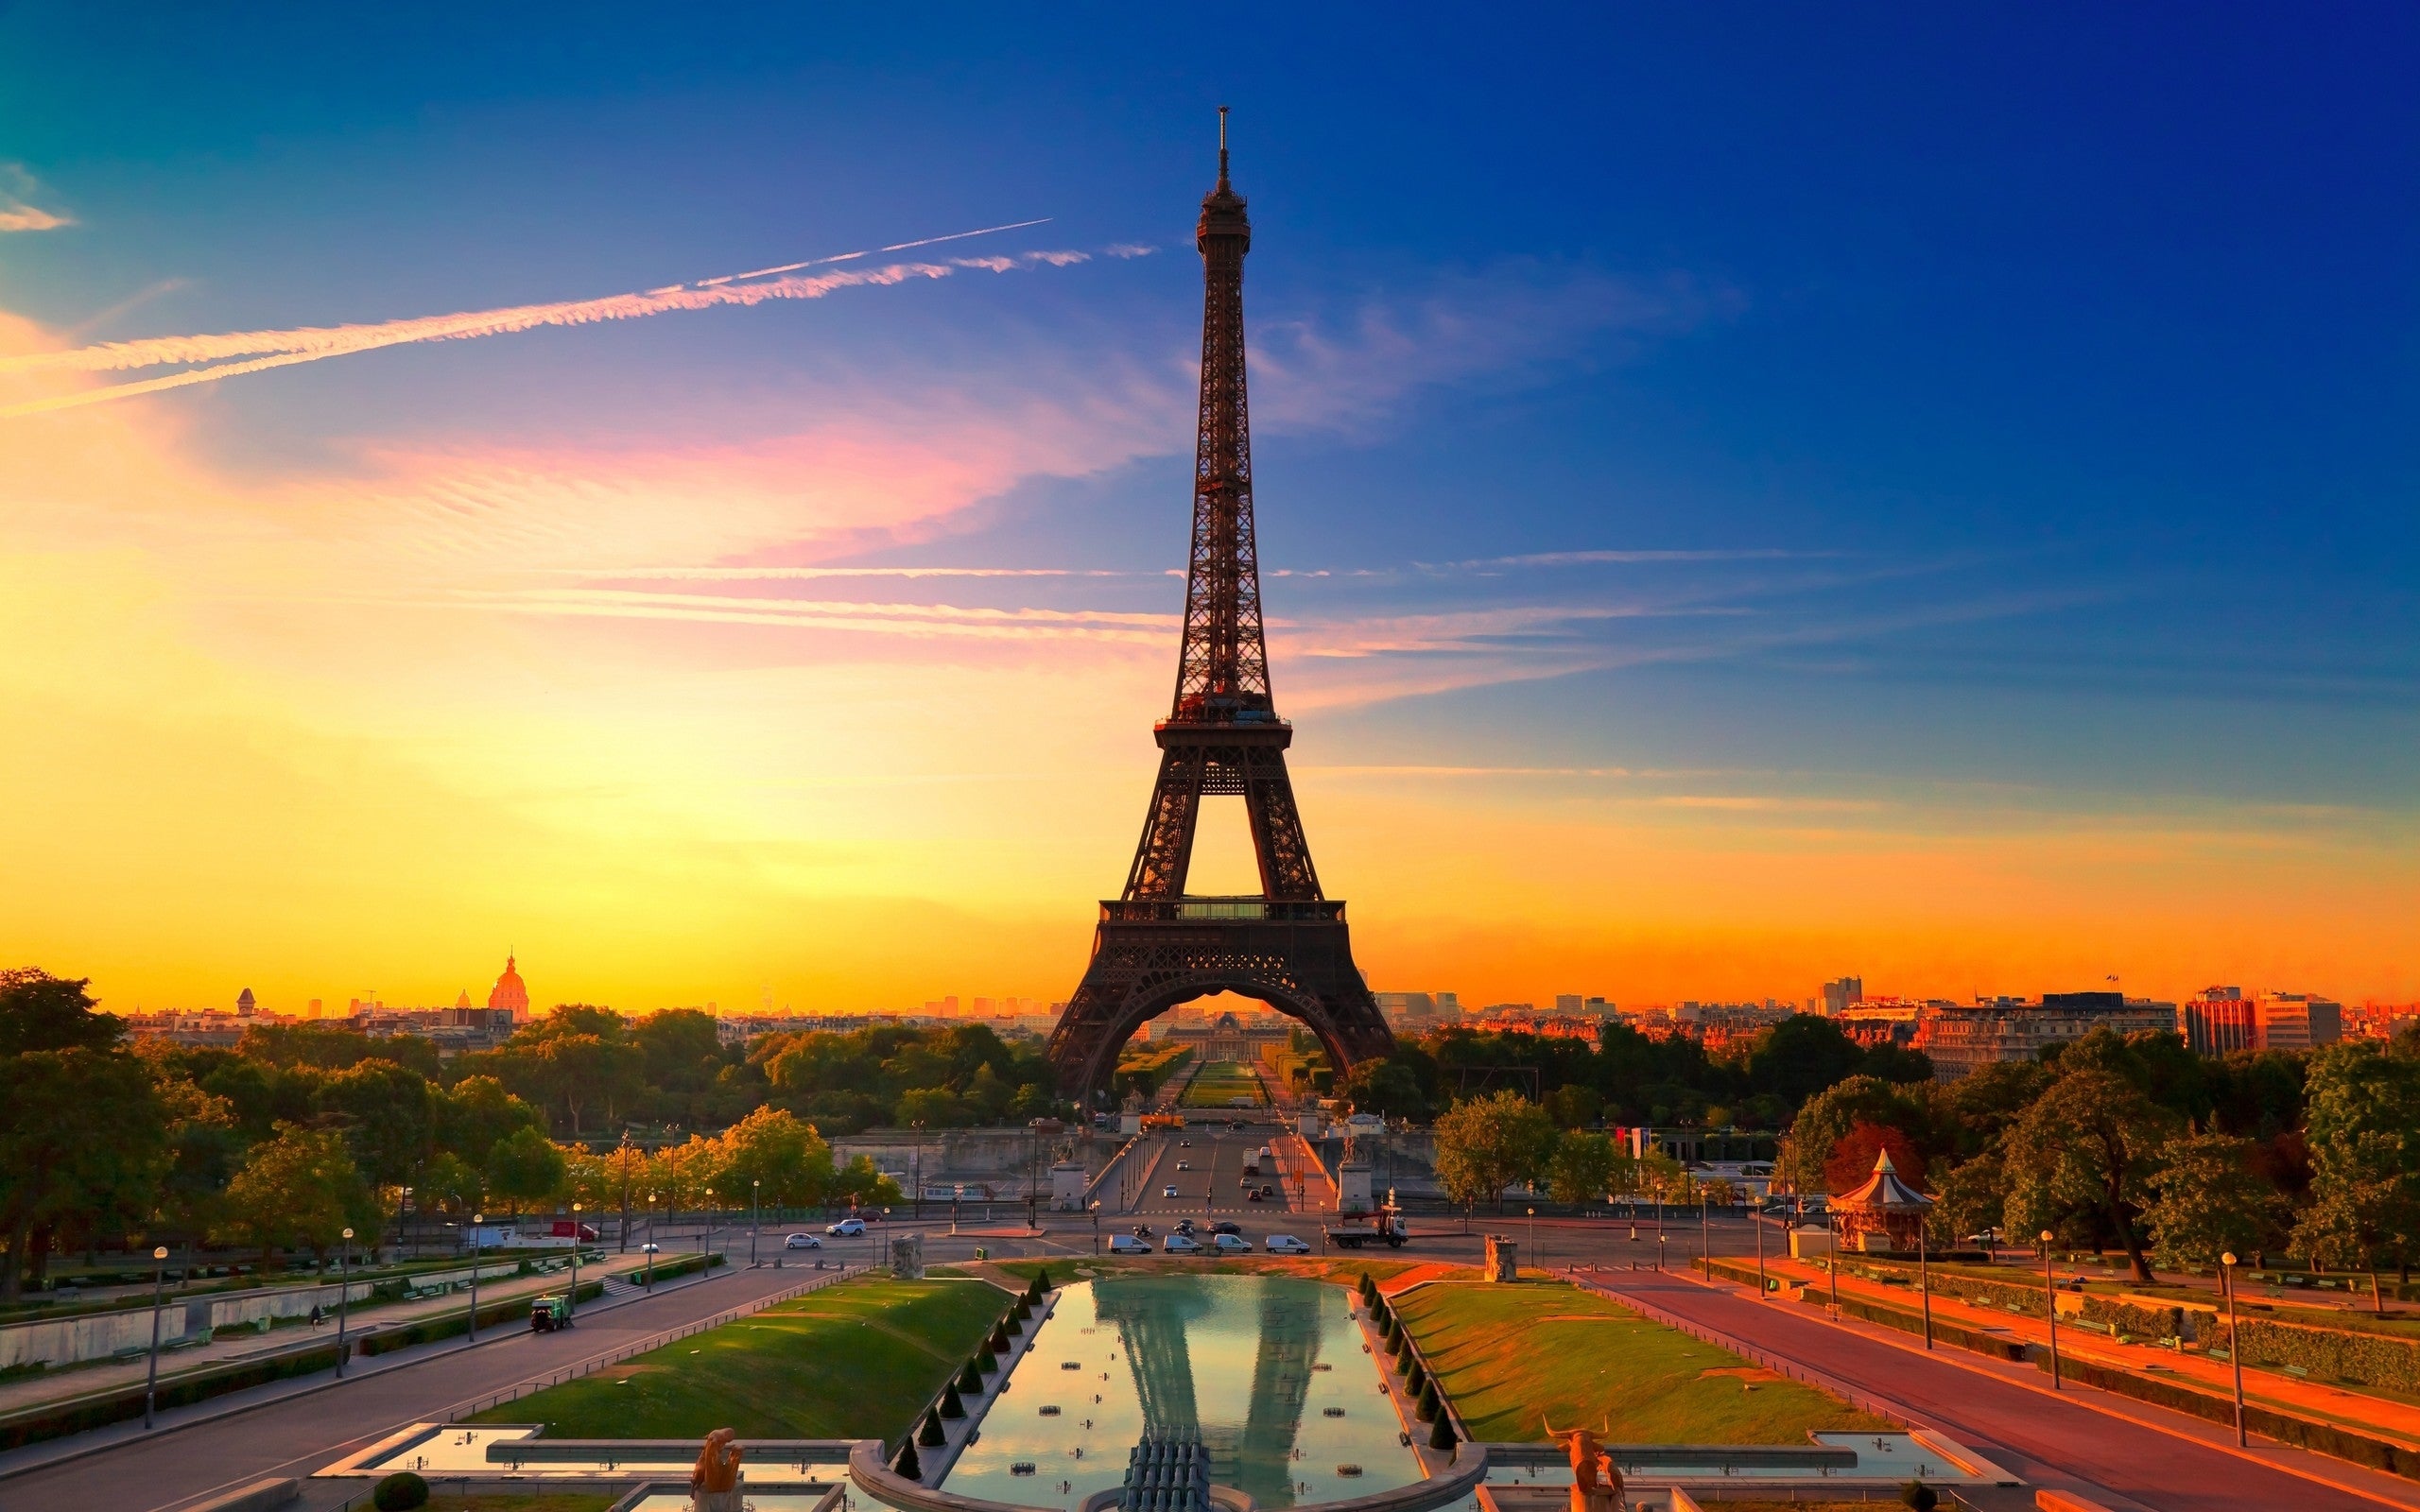 Eiffel Tower Photo Print